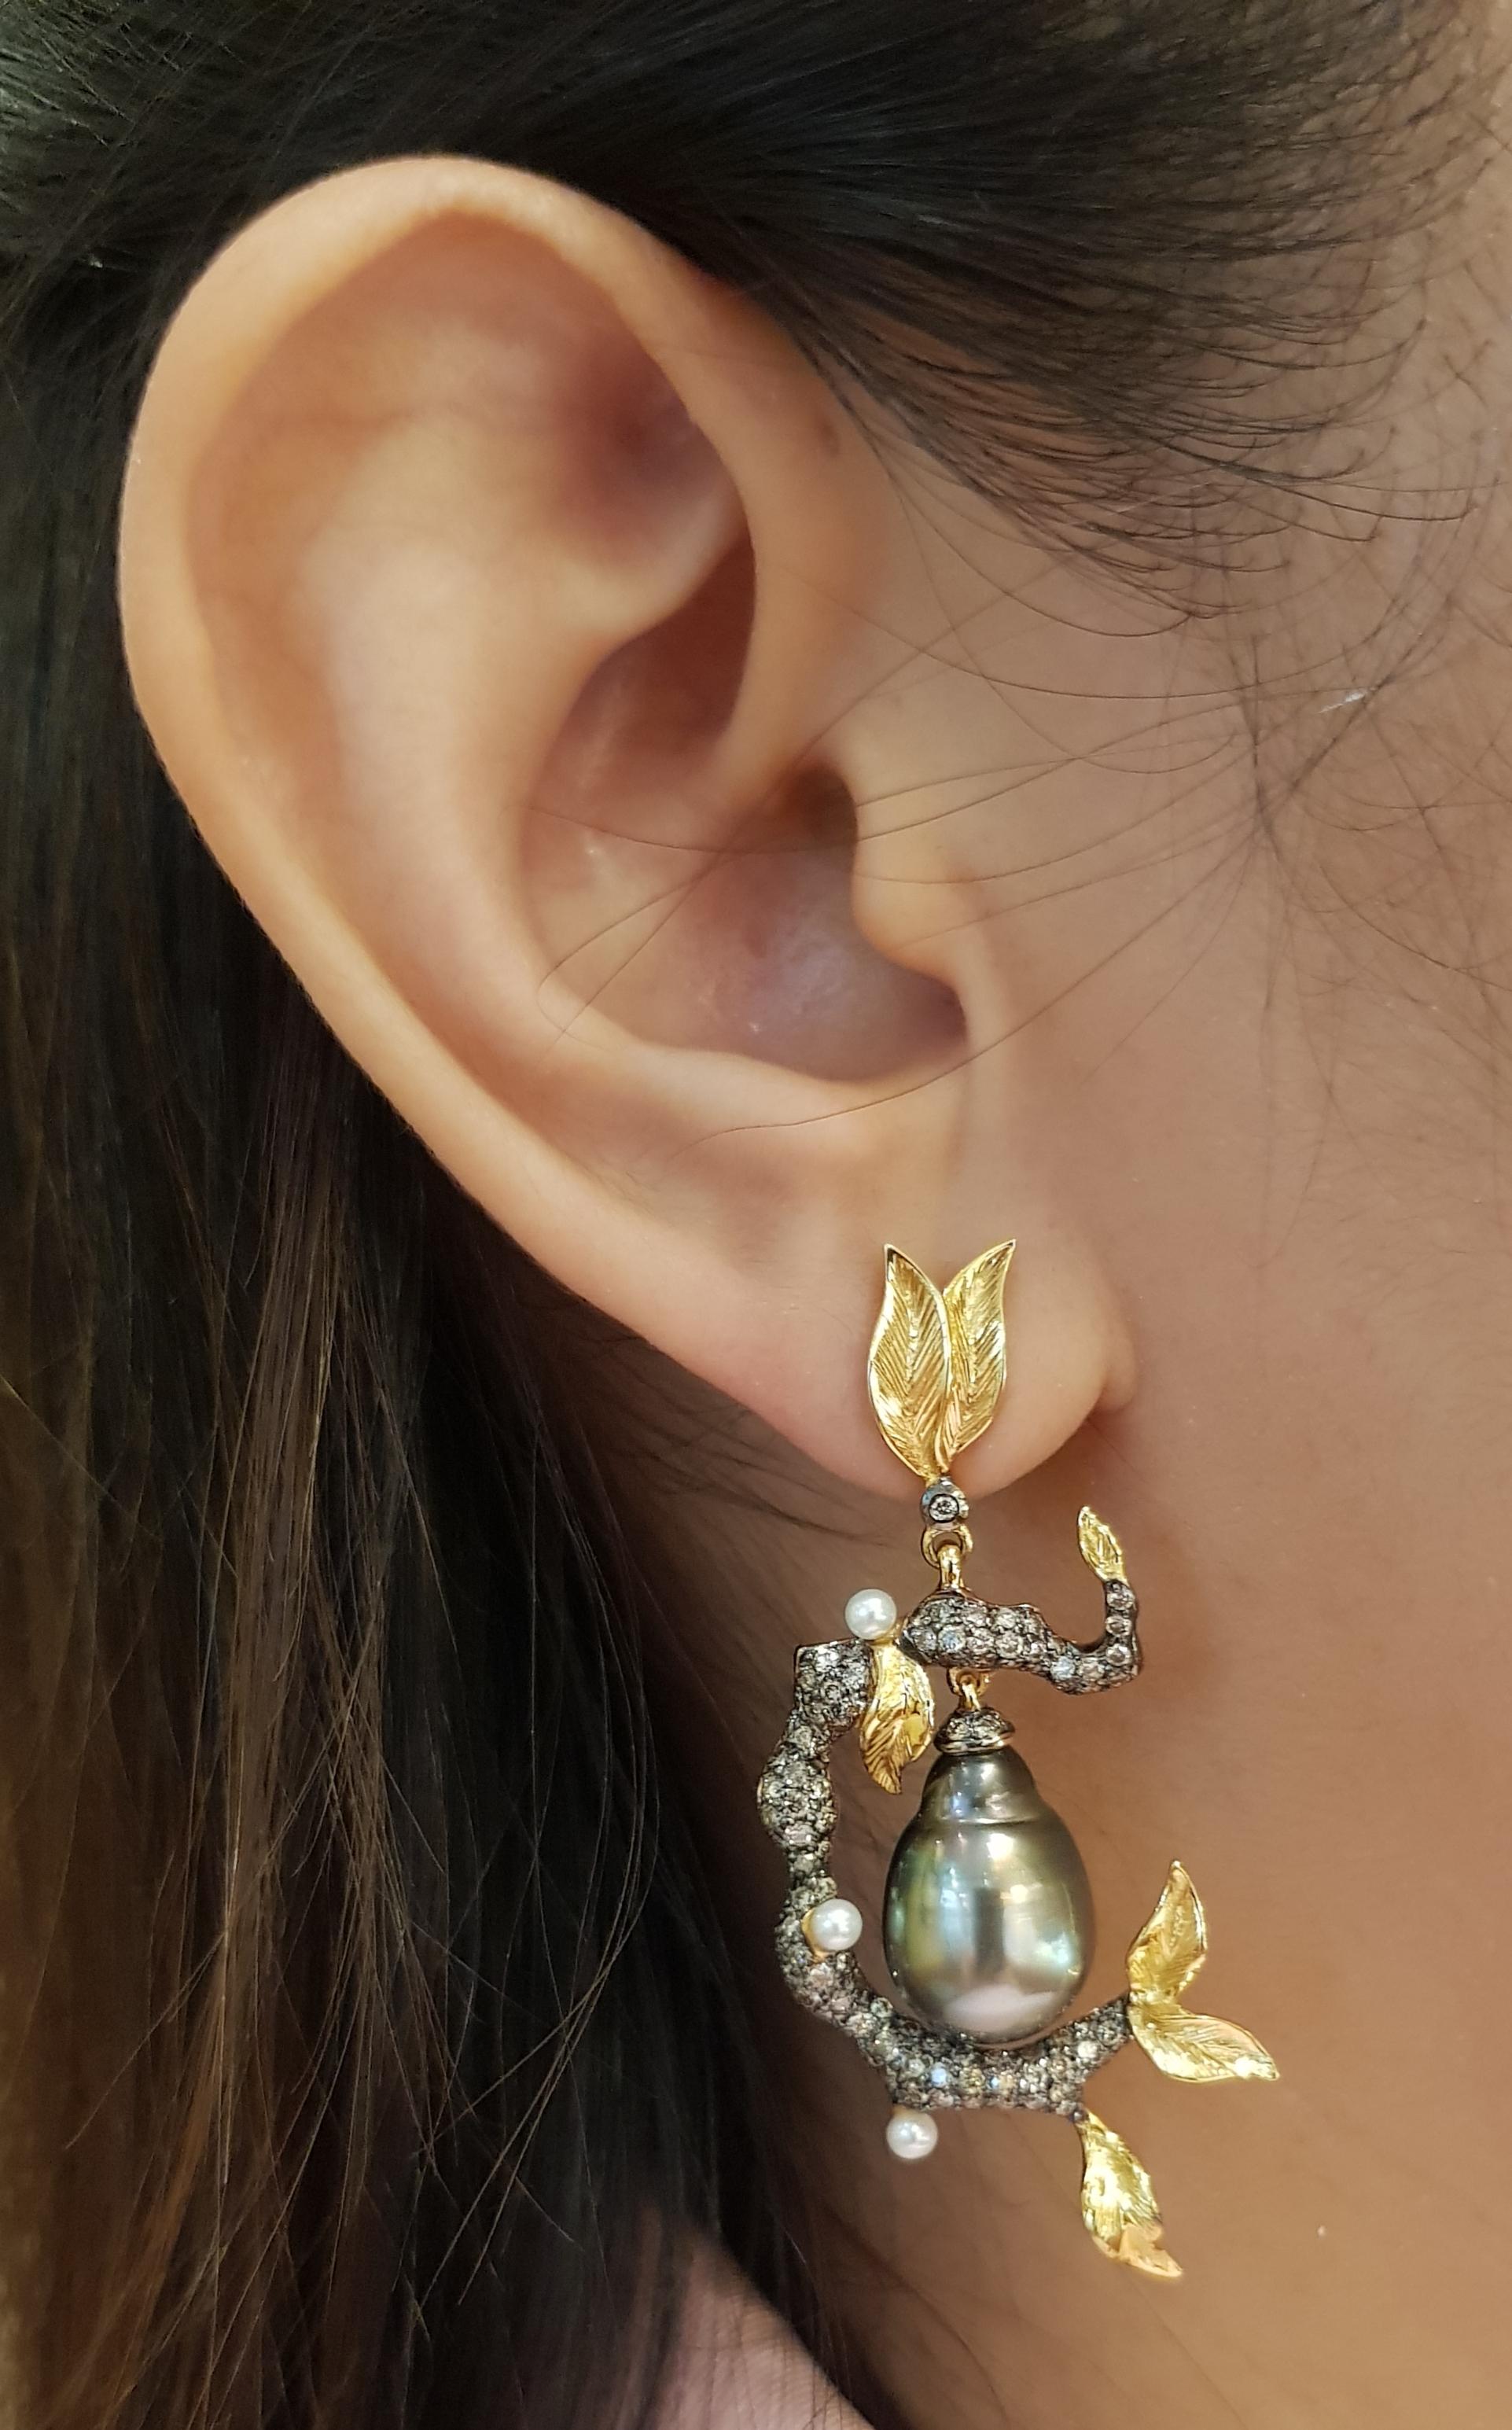 Tahitian Pearl with Brown Diamond 1.87 carats Earrings set in 18 Karat Gold Settings

Width:  2.0 cm 
Length:  5.1 cm
Total Weight: 18.94 grams

Pearl: 10 mm

